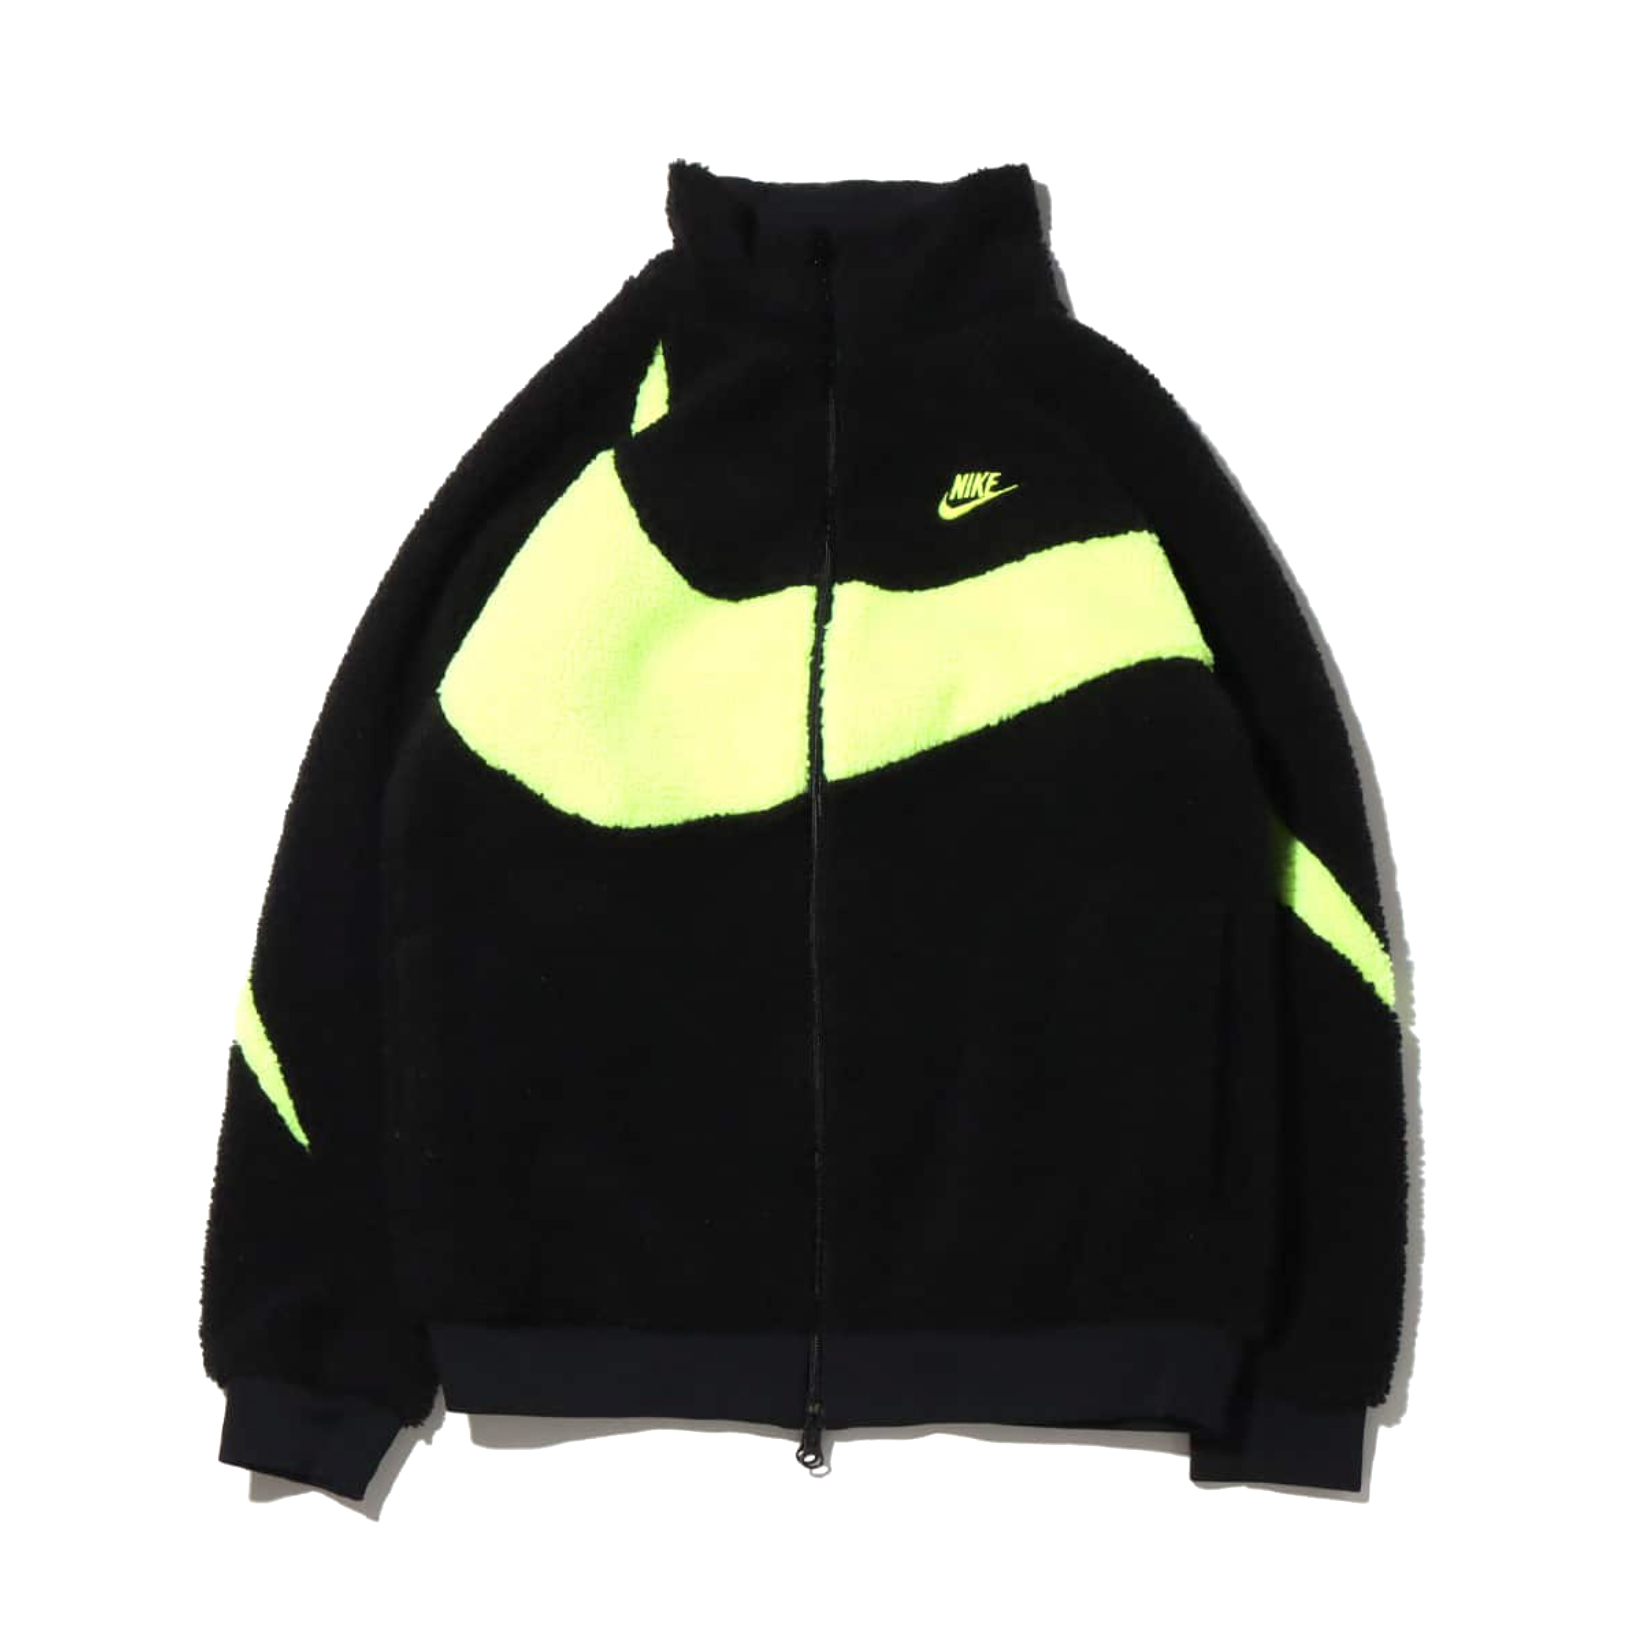 Nike Sportswear Big Swoosh Woven Jacket (Asia Sizing) Black/White 